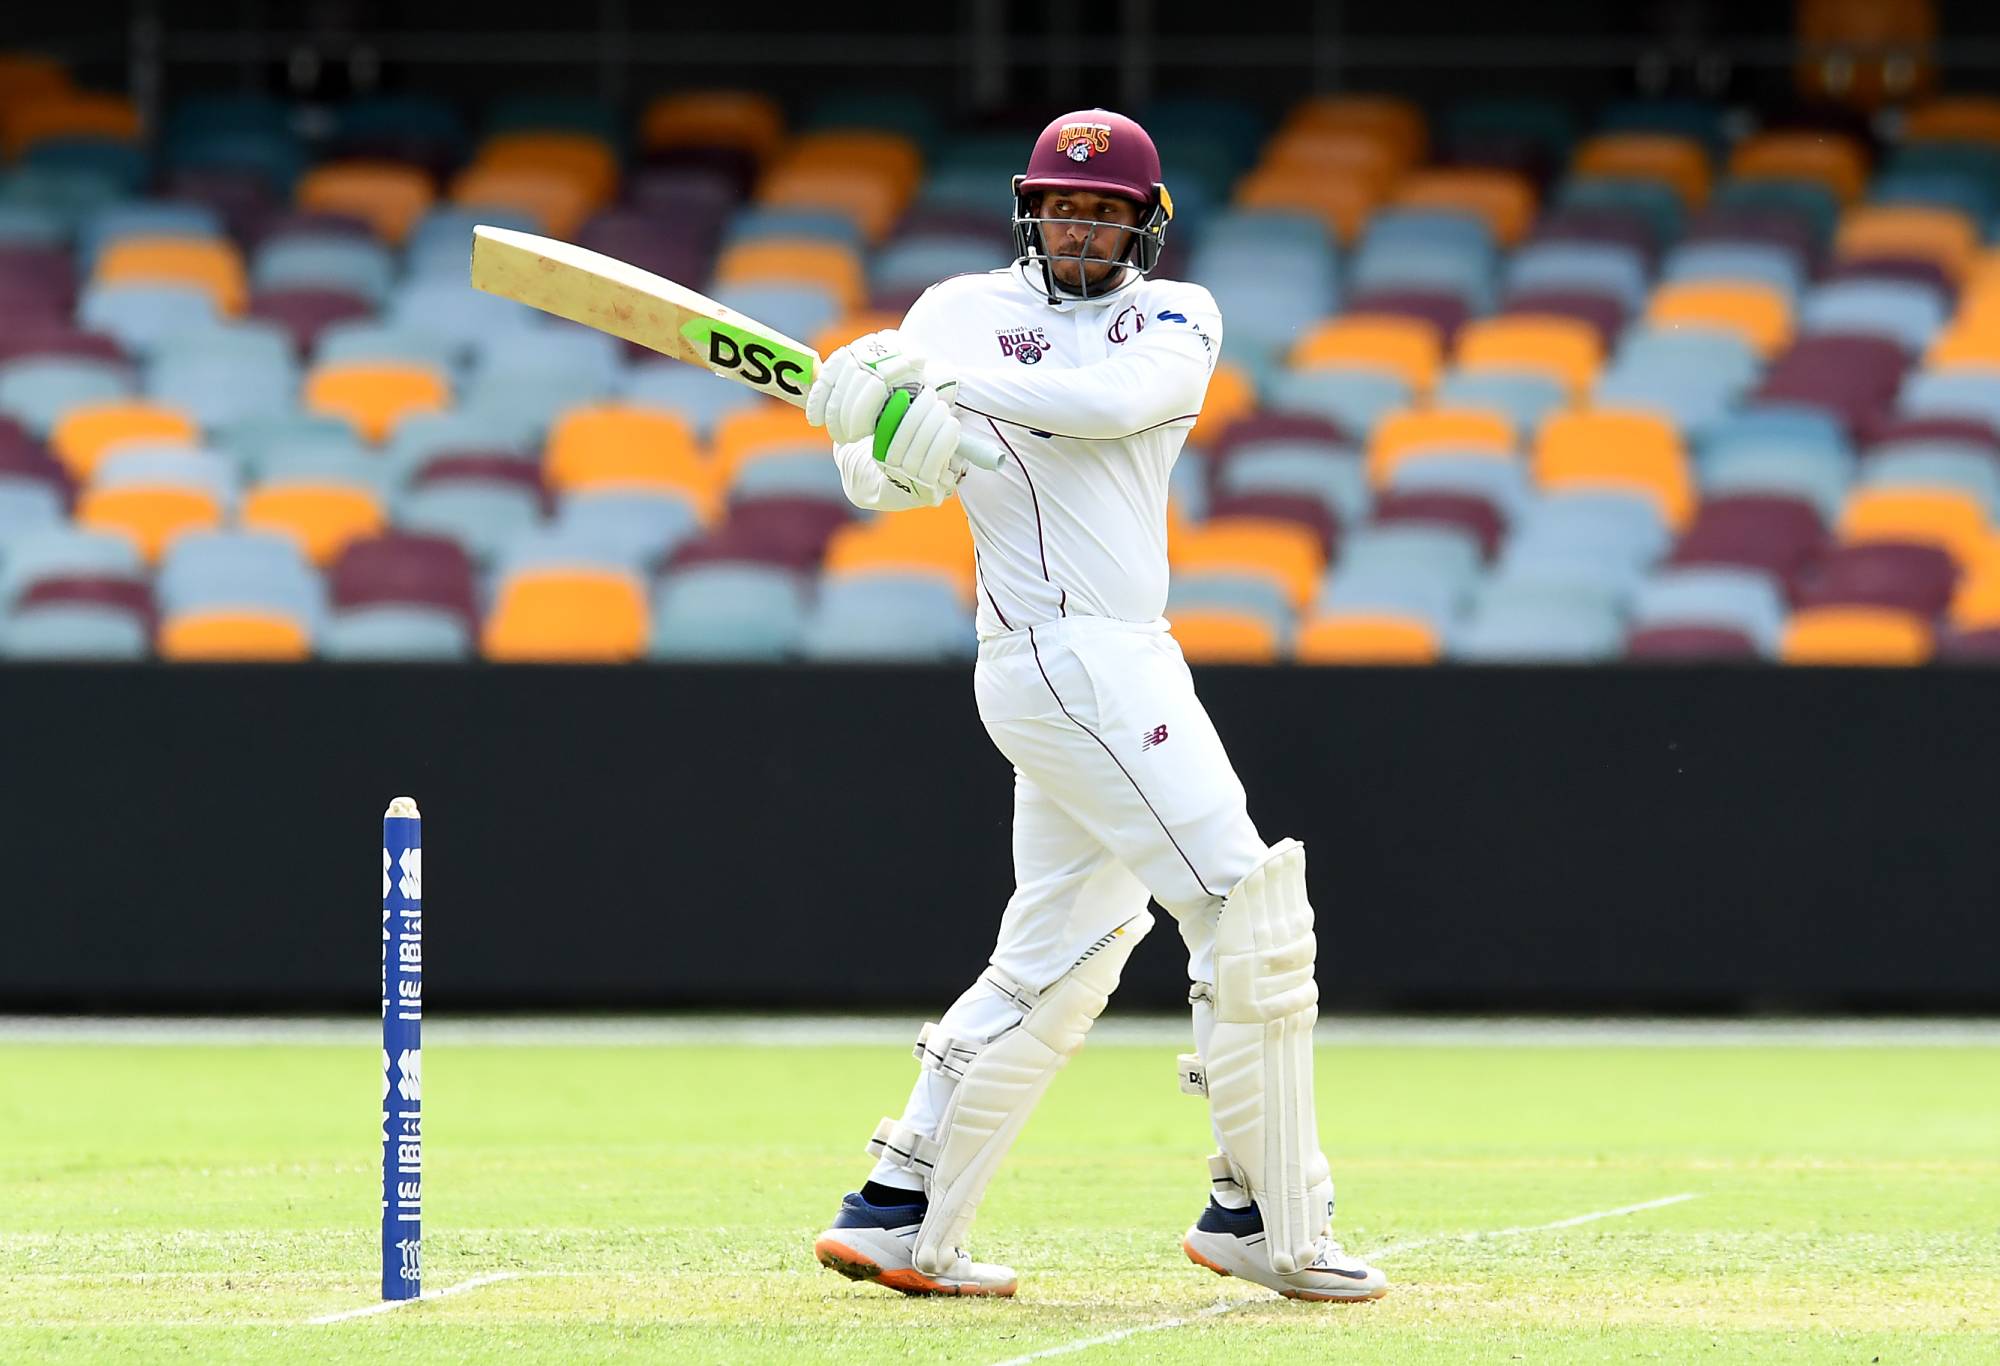 Usman Khawaja batting for Queensland